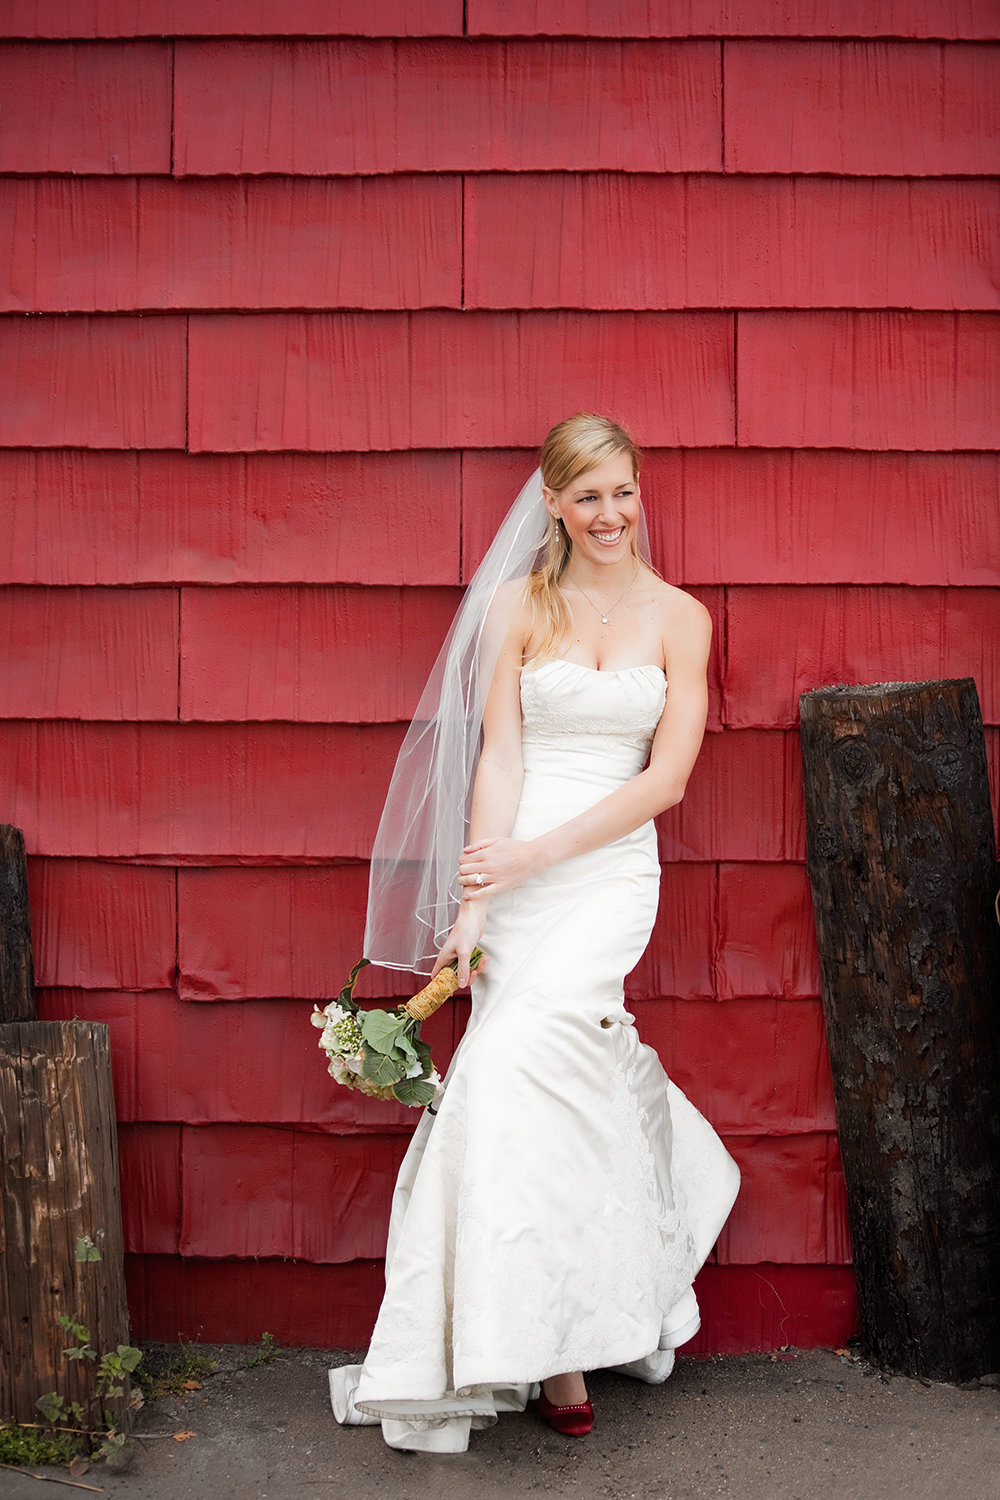 Destination wedding photos rustic red barn